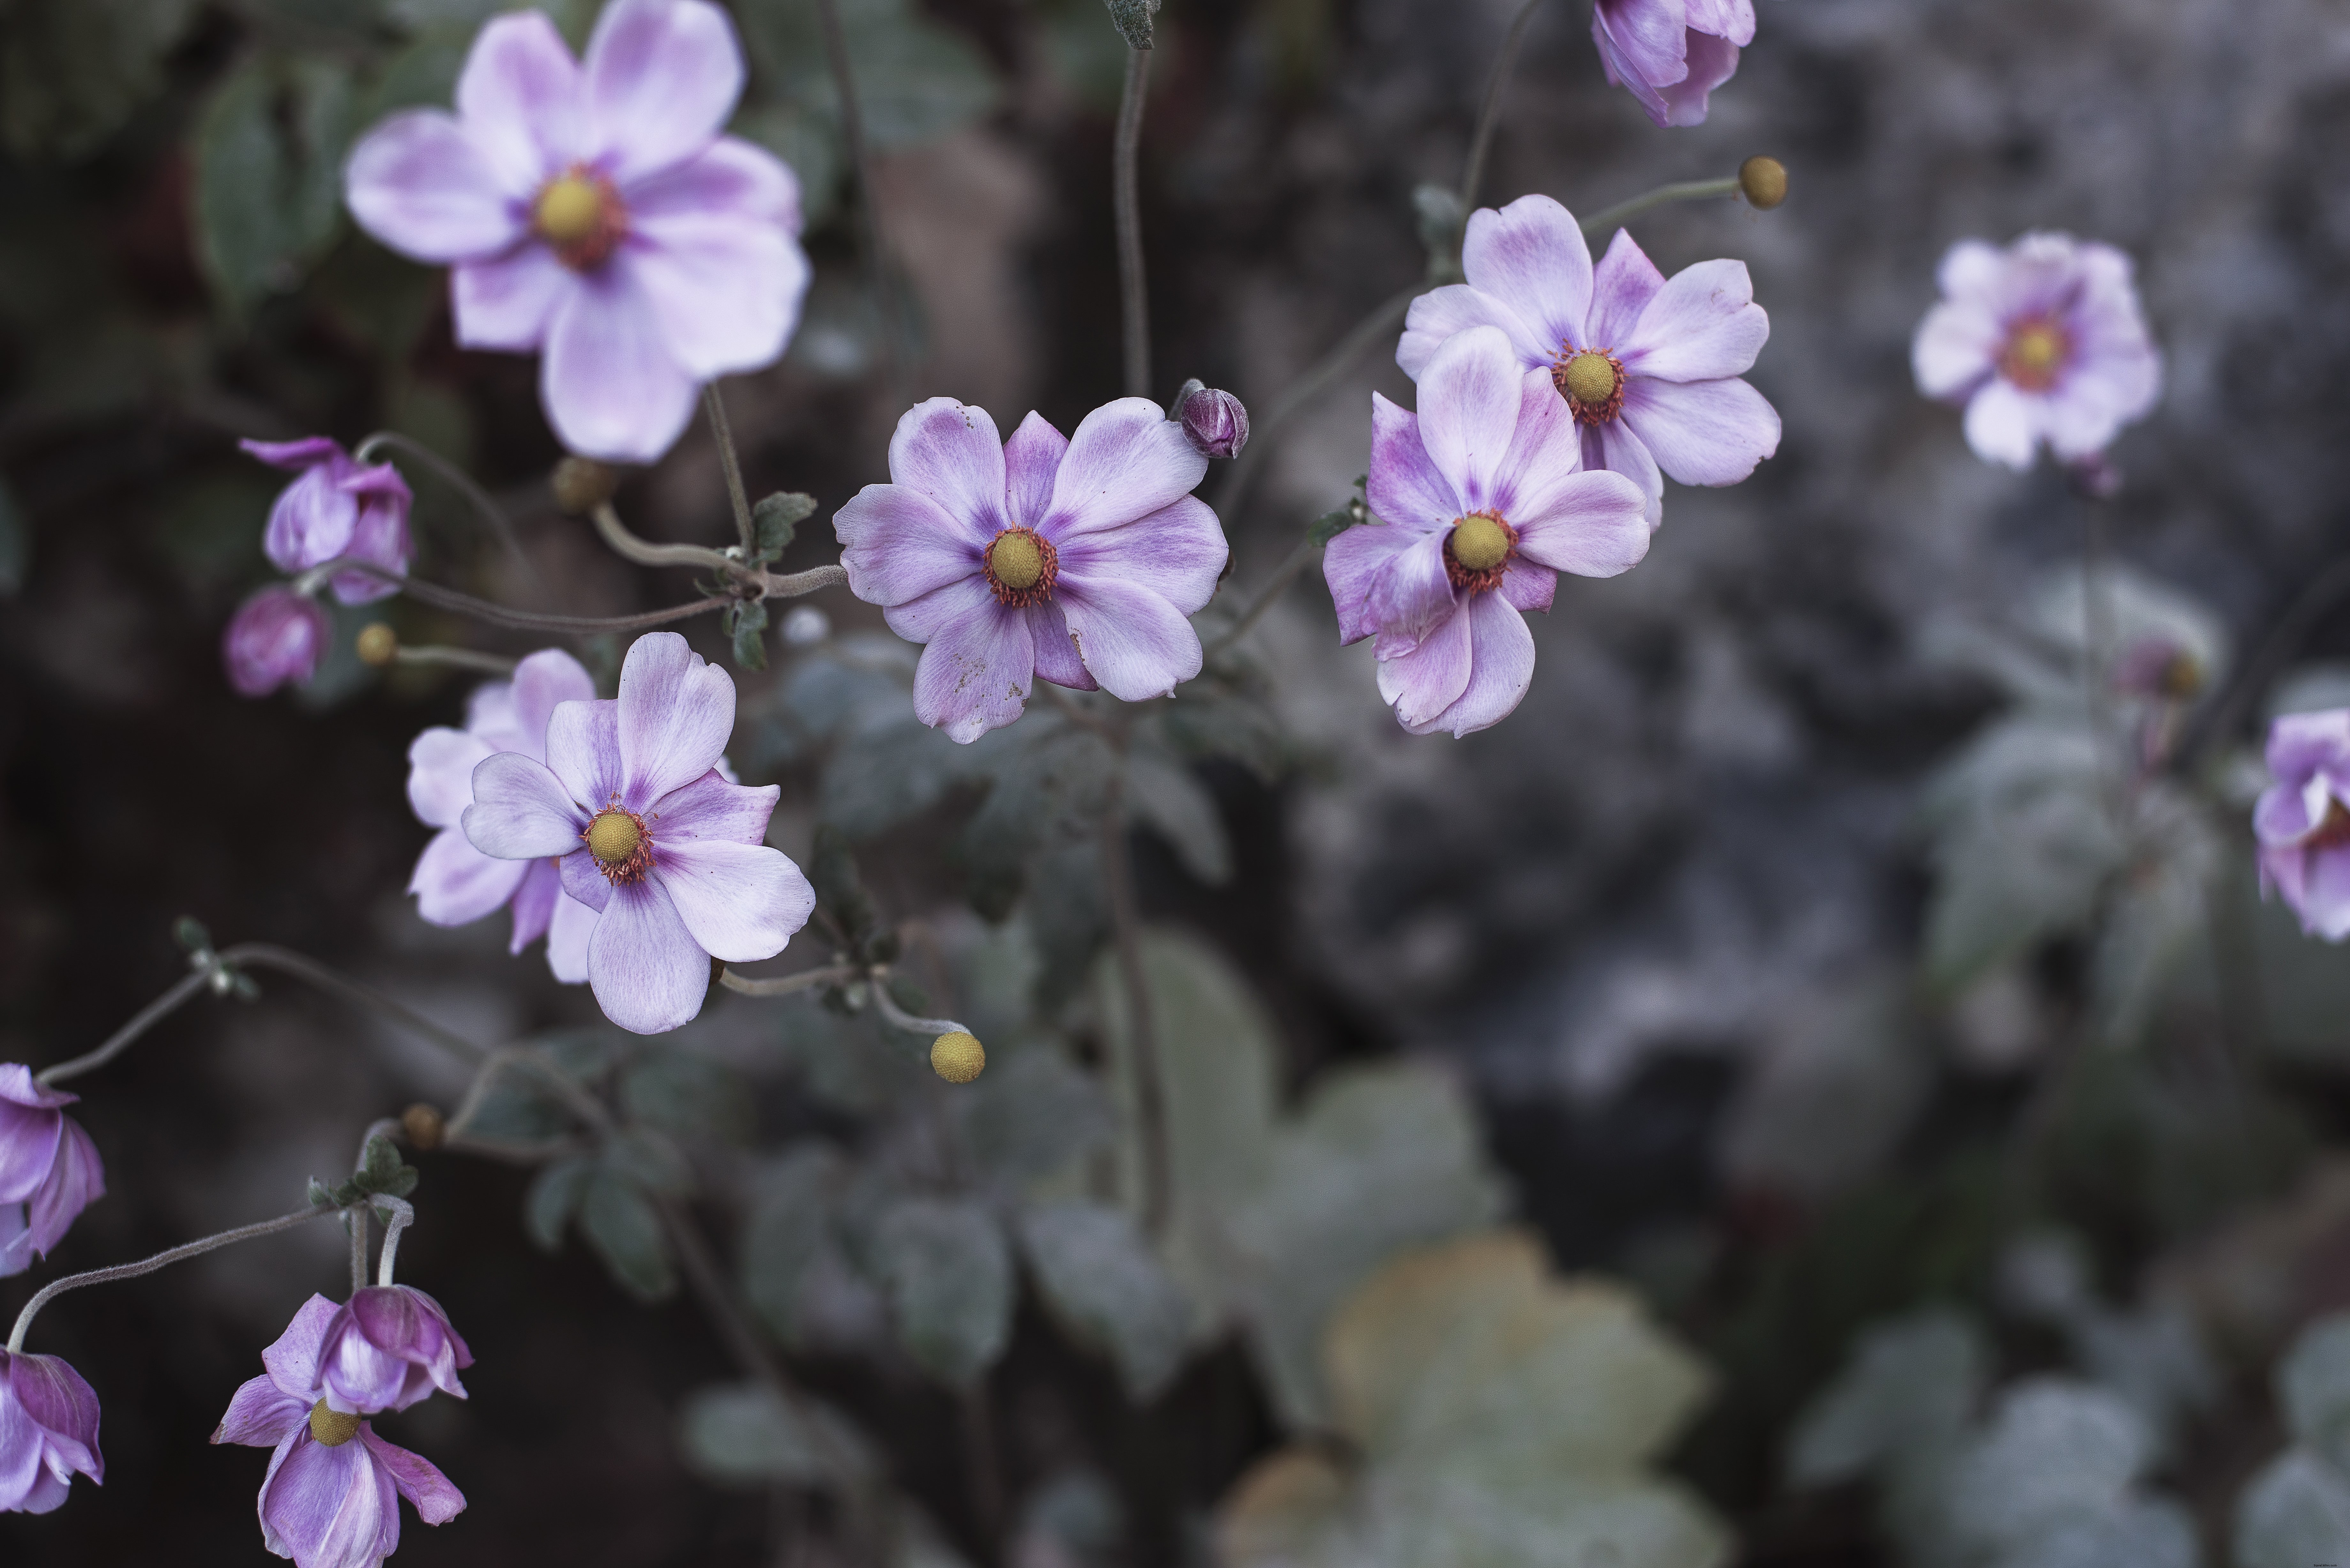 Foto floreciente de las flores perennes púrpuras